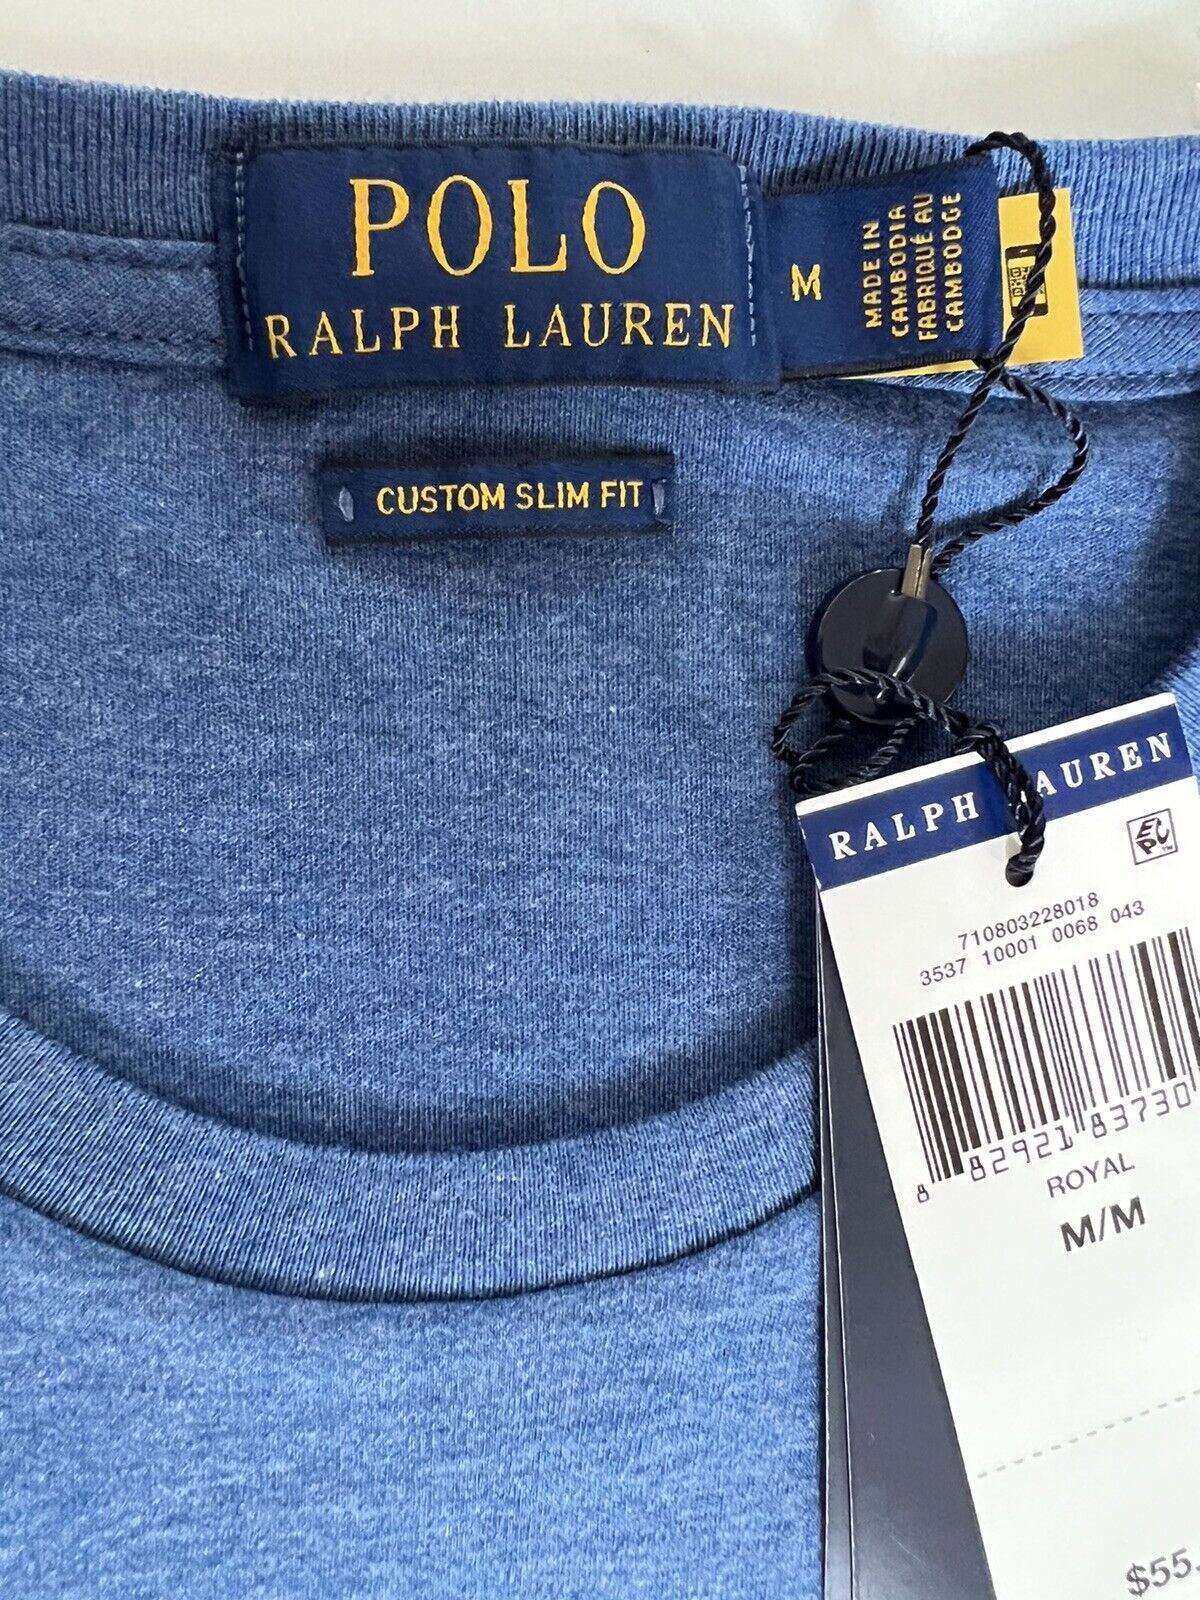 СЗТ 55 долларов США Polo Ralph Lauren Royal Blue Футболка узкого кроя на заказ, средний размер